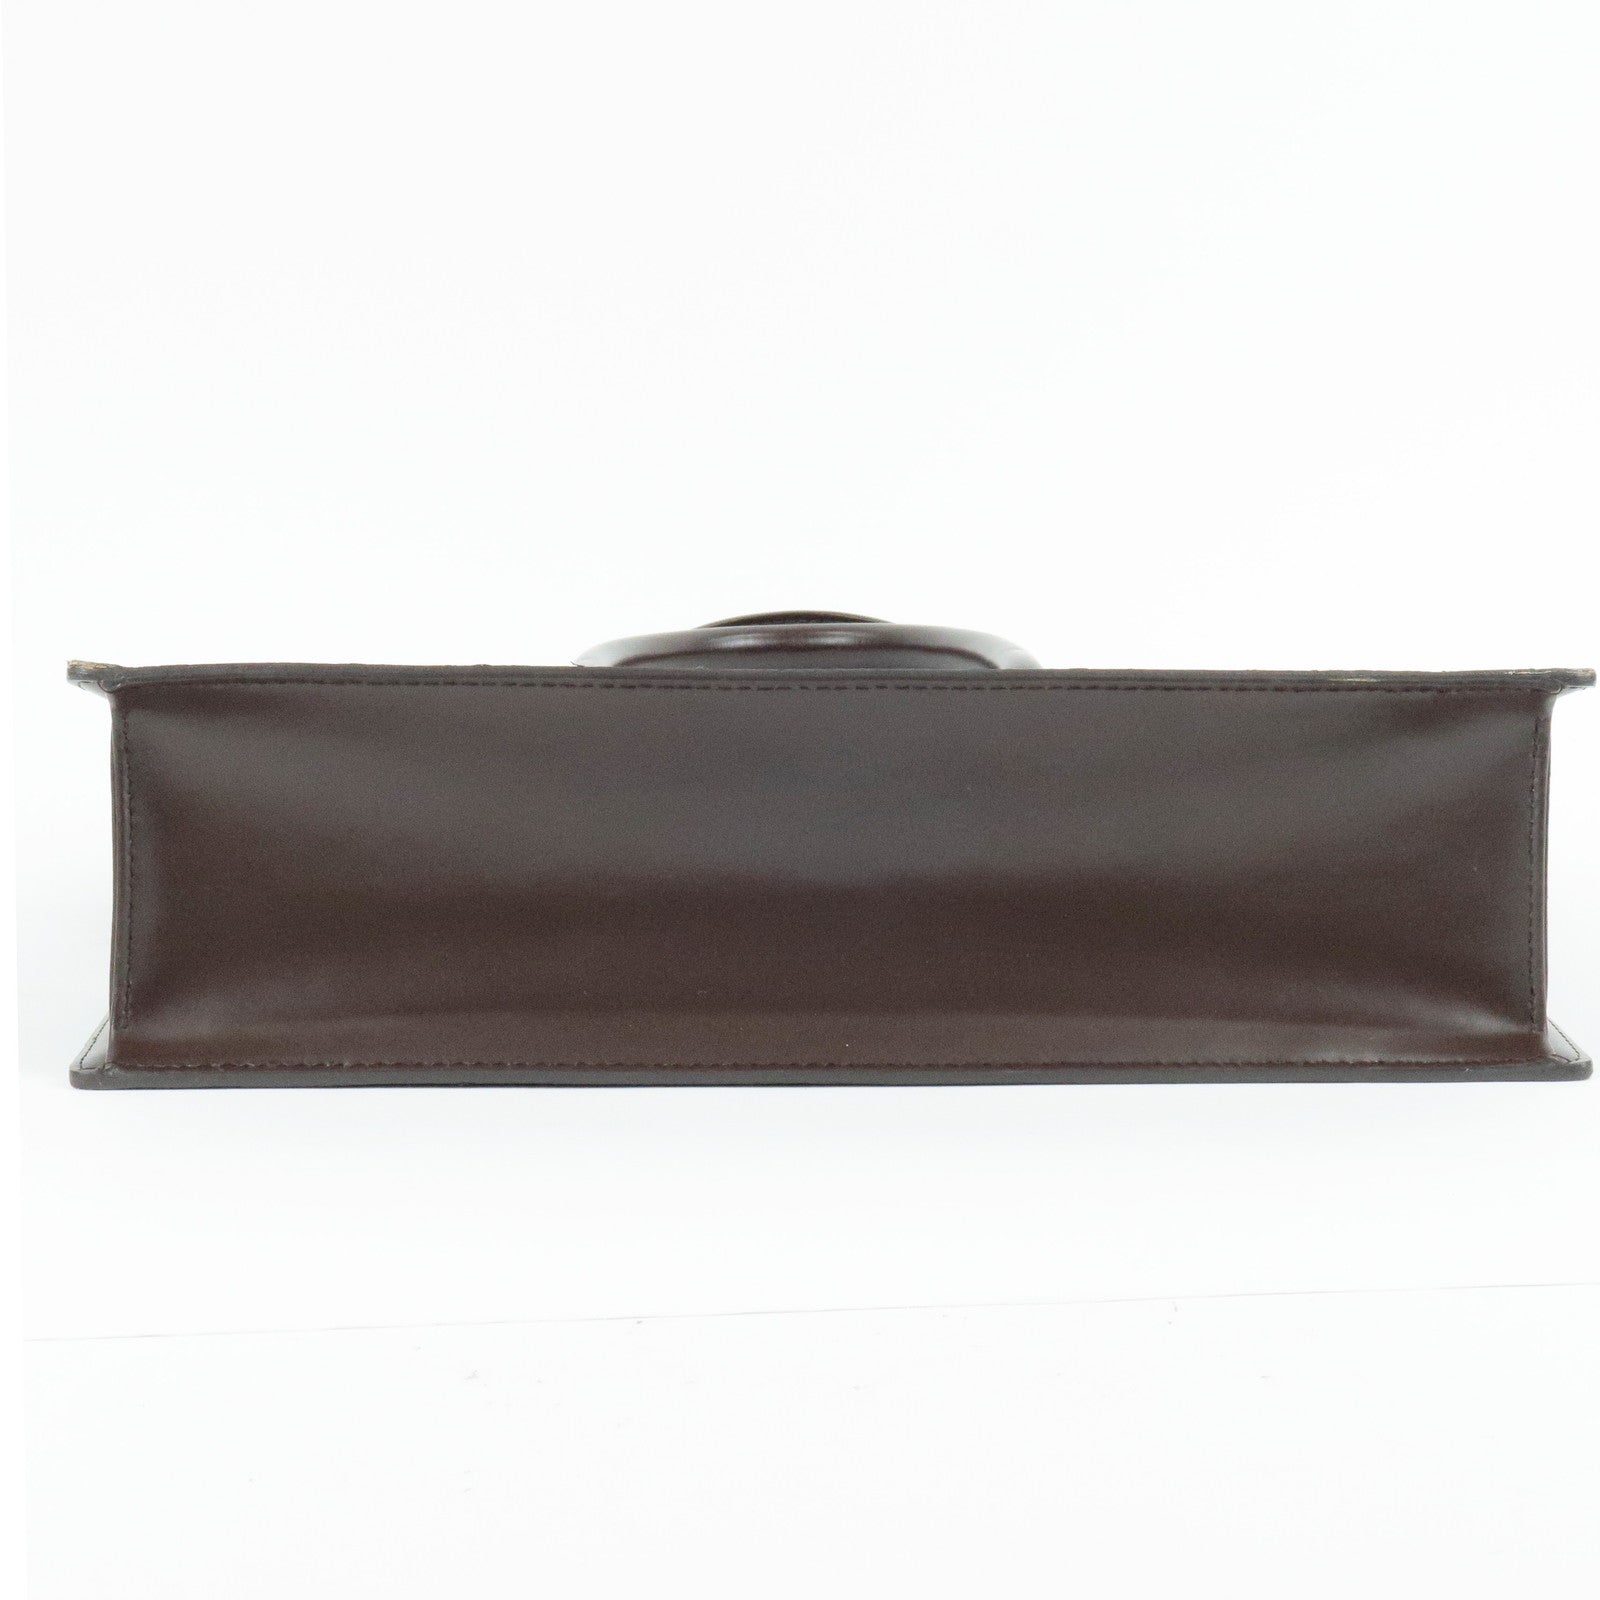 Louis Vuitton Venice Gm Hand Bag